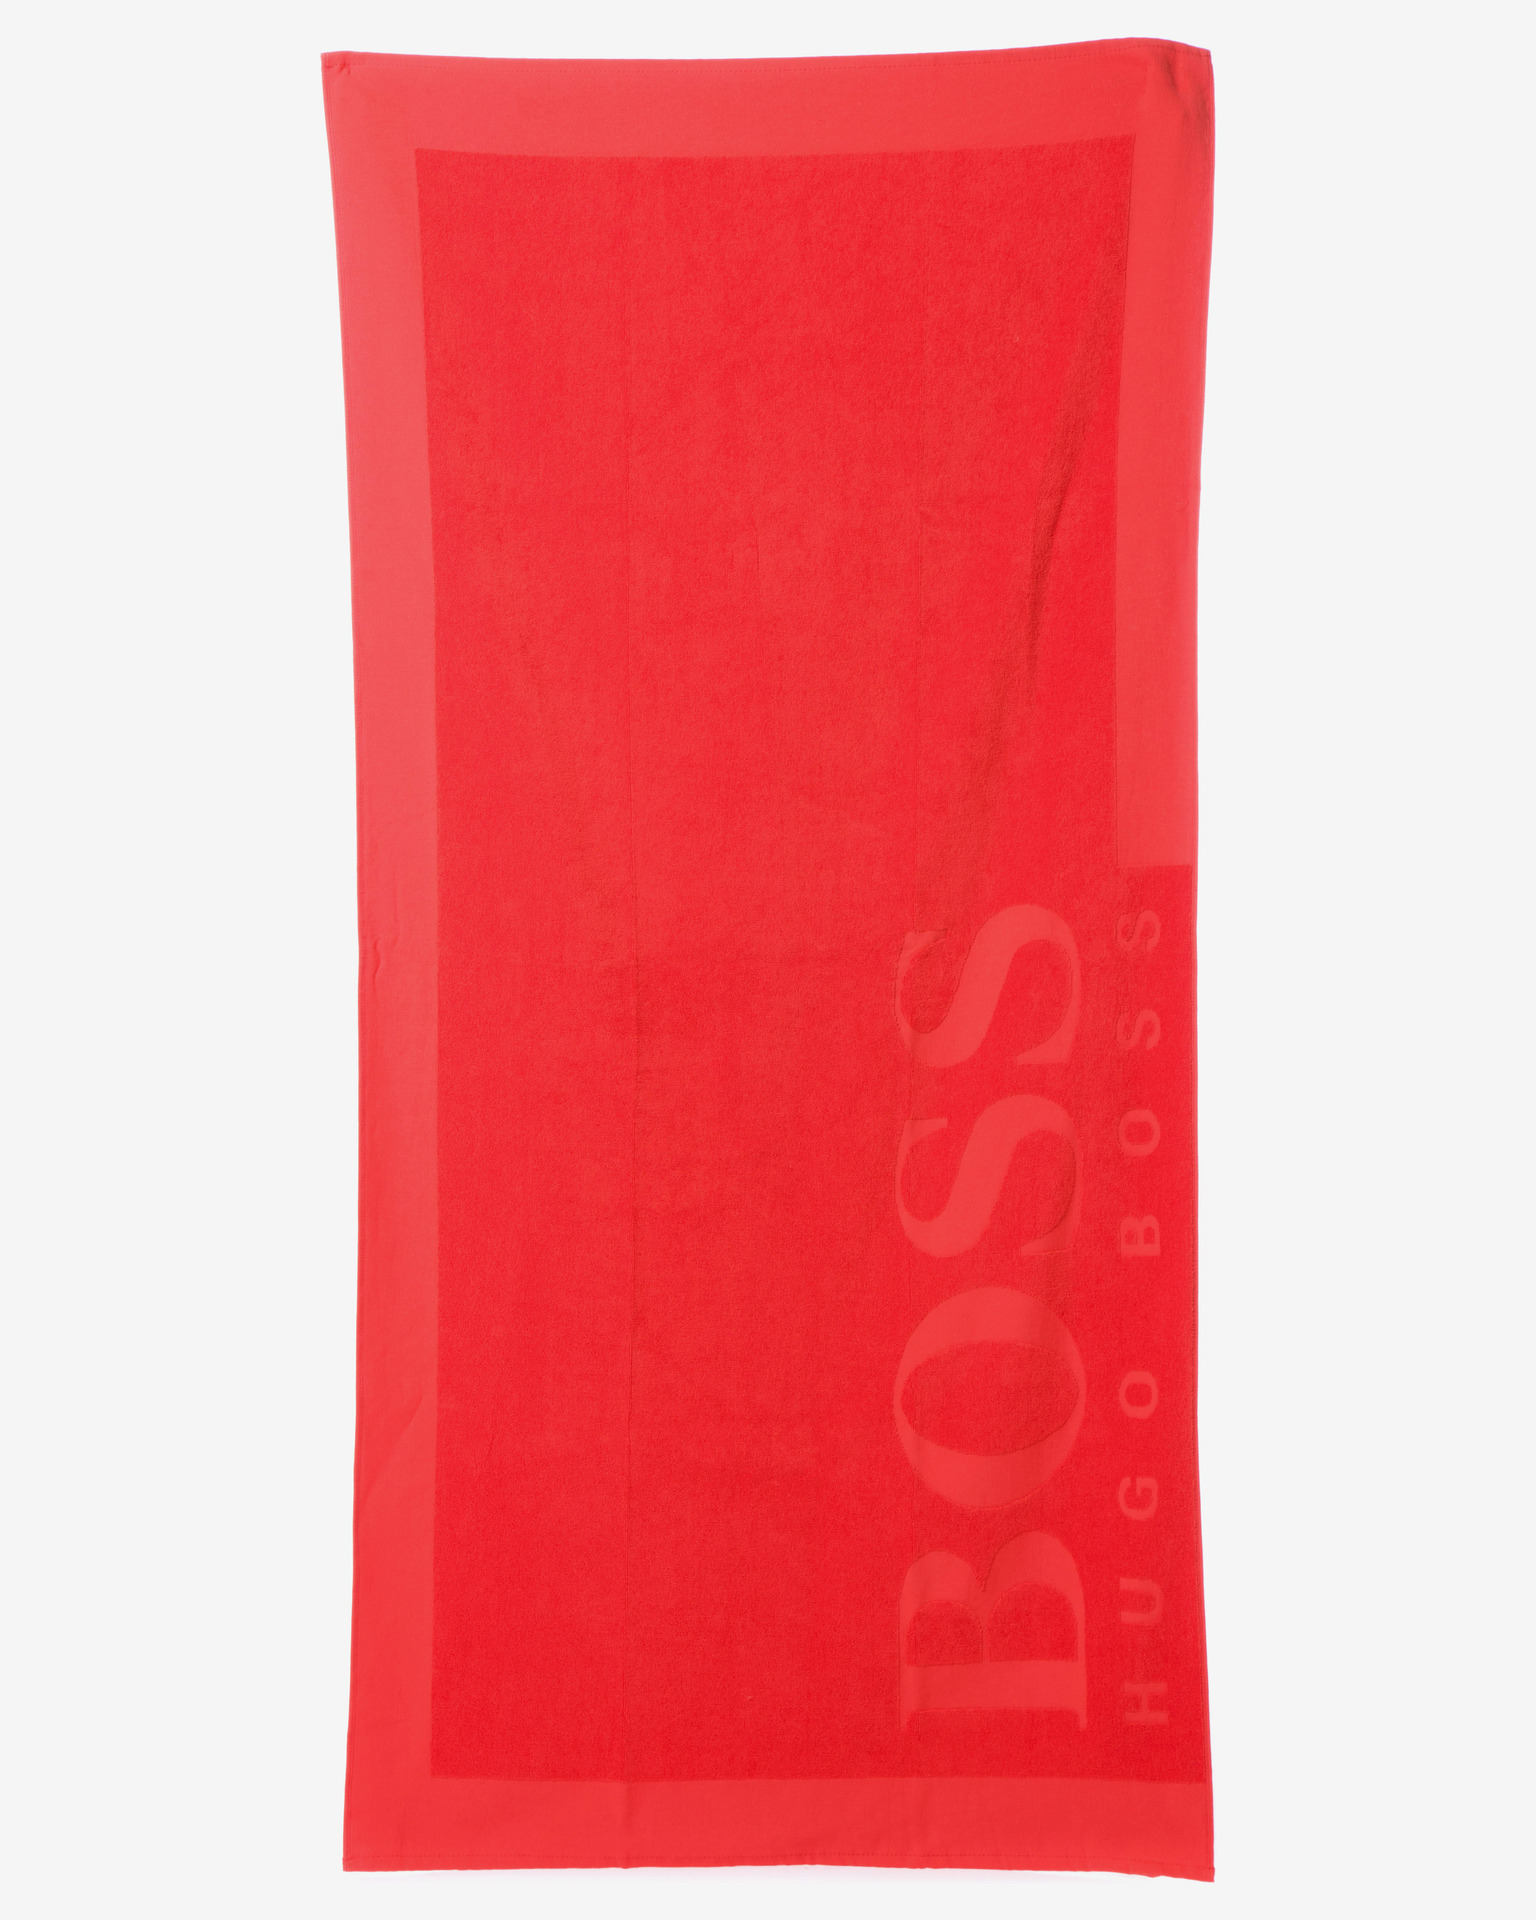 Hugo Boss - Towel Bibloo.com